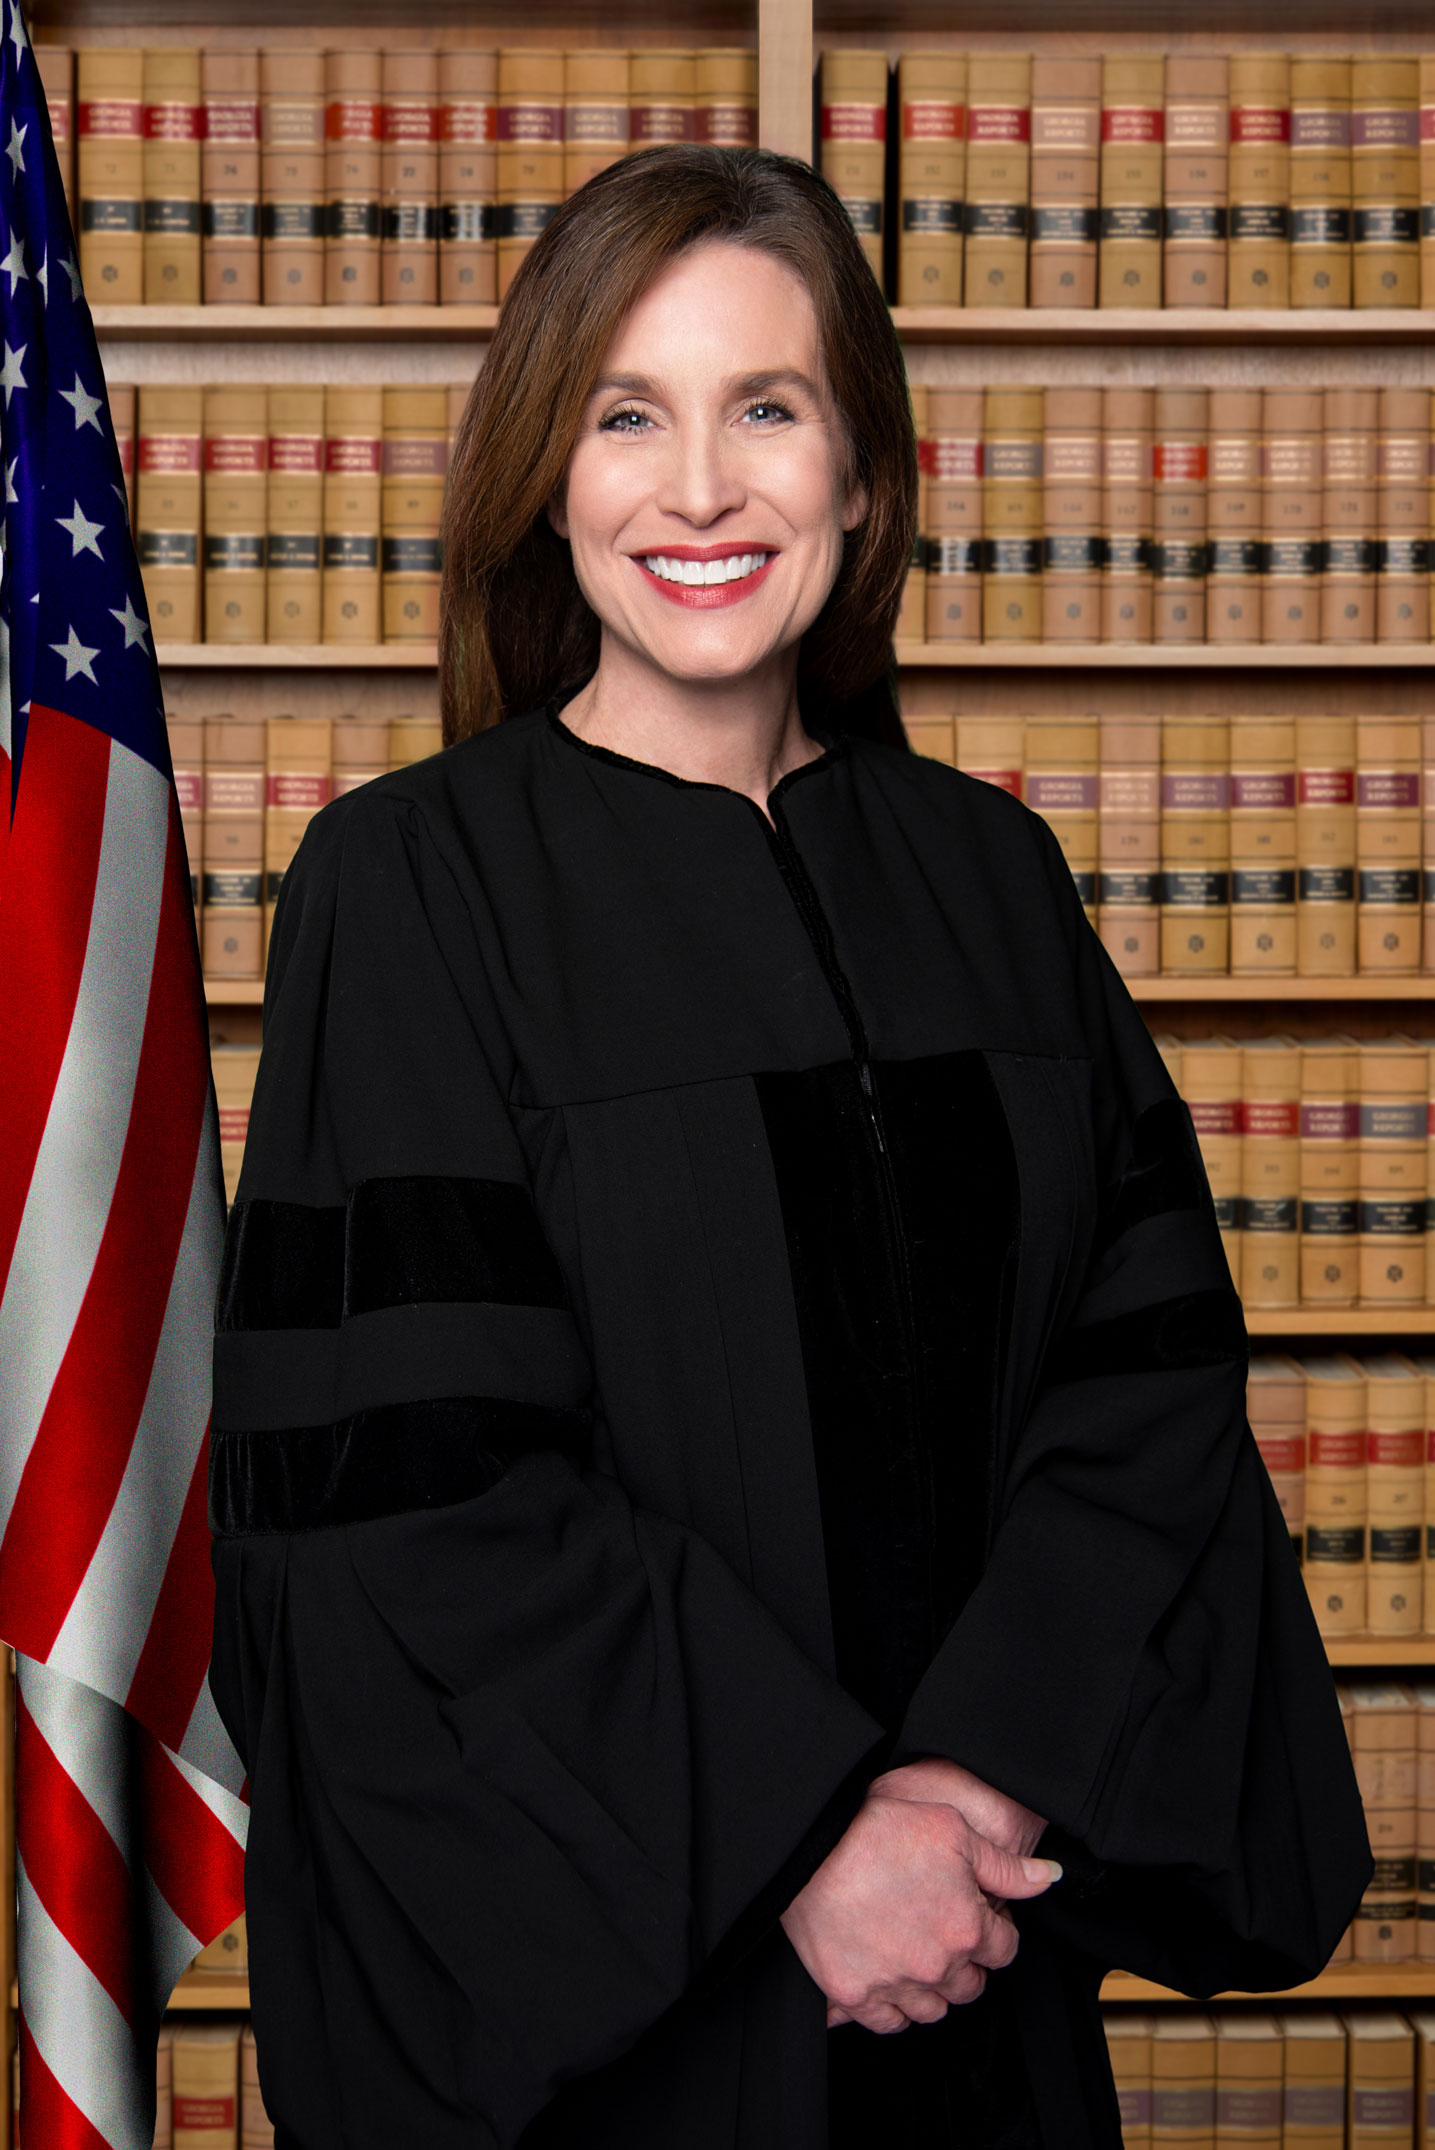 Judge Paige Reese Whitaker